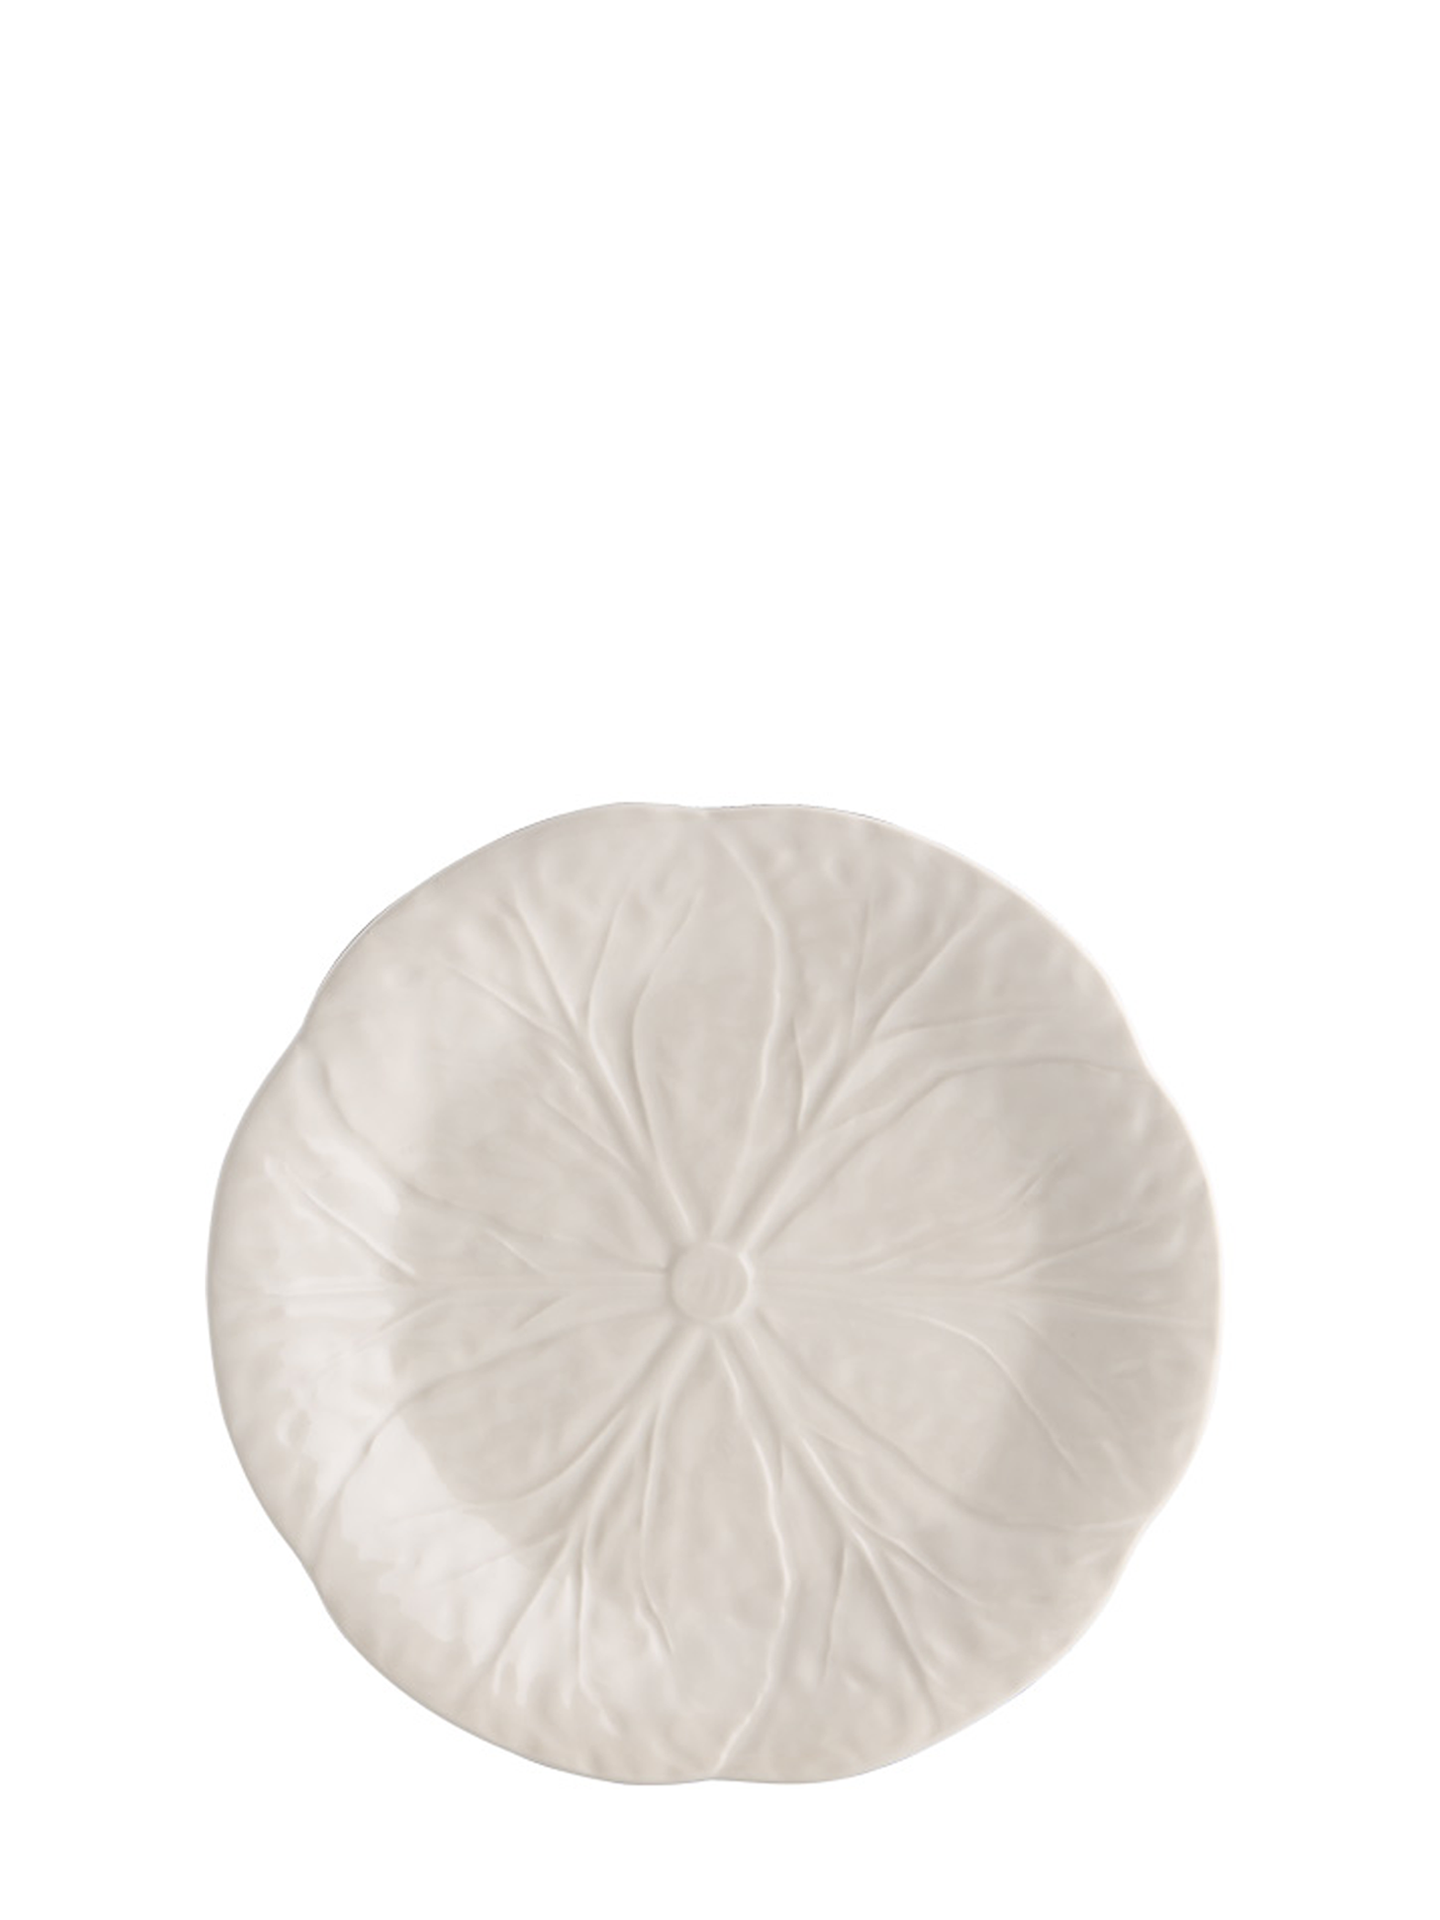 Bordallo Pinheiro: Cabbage Plate (19 cm), ivory